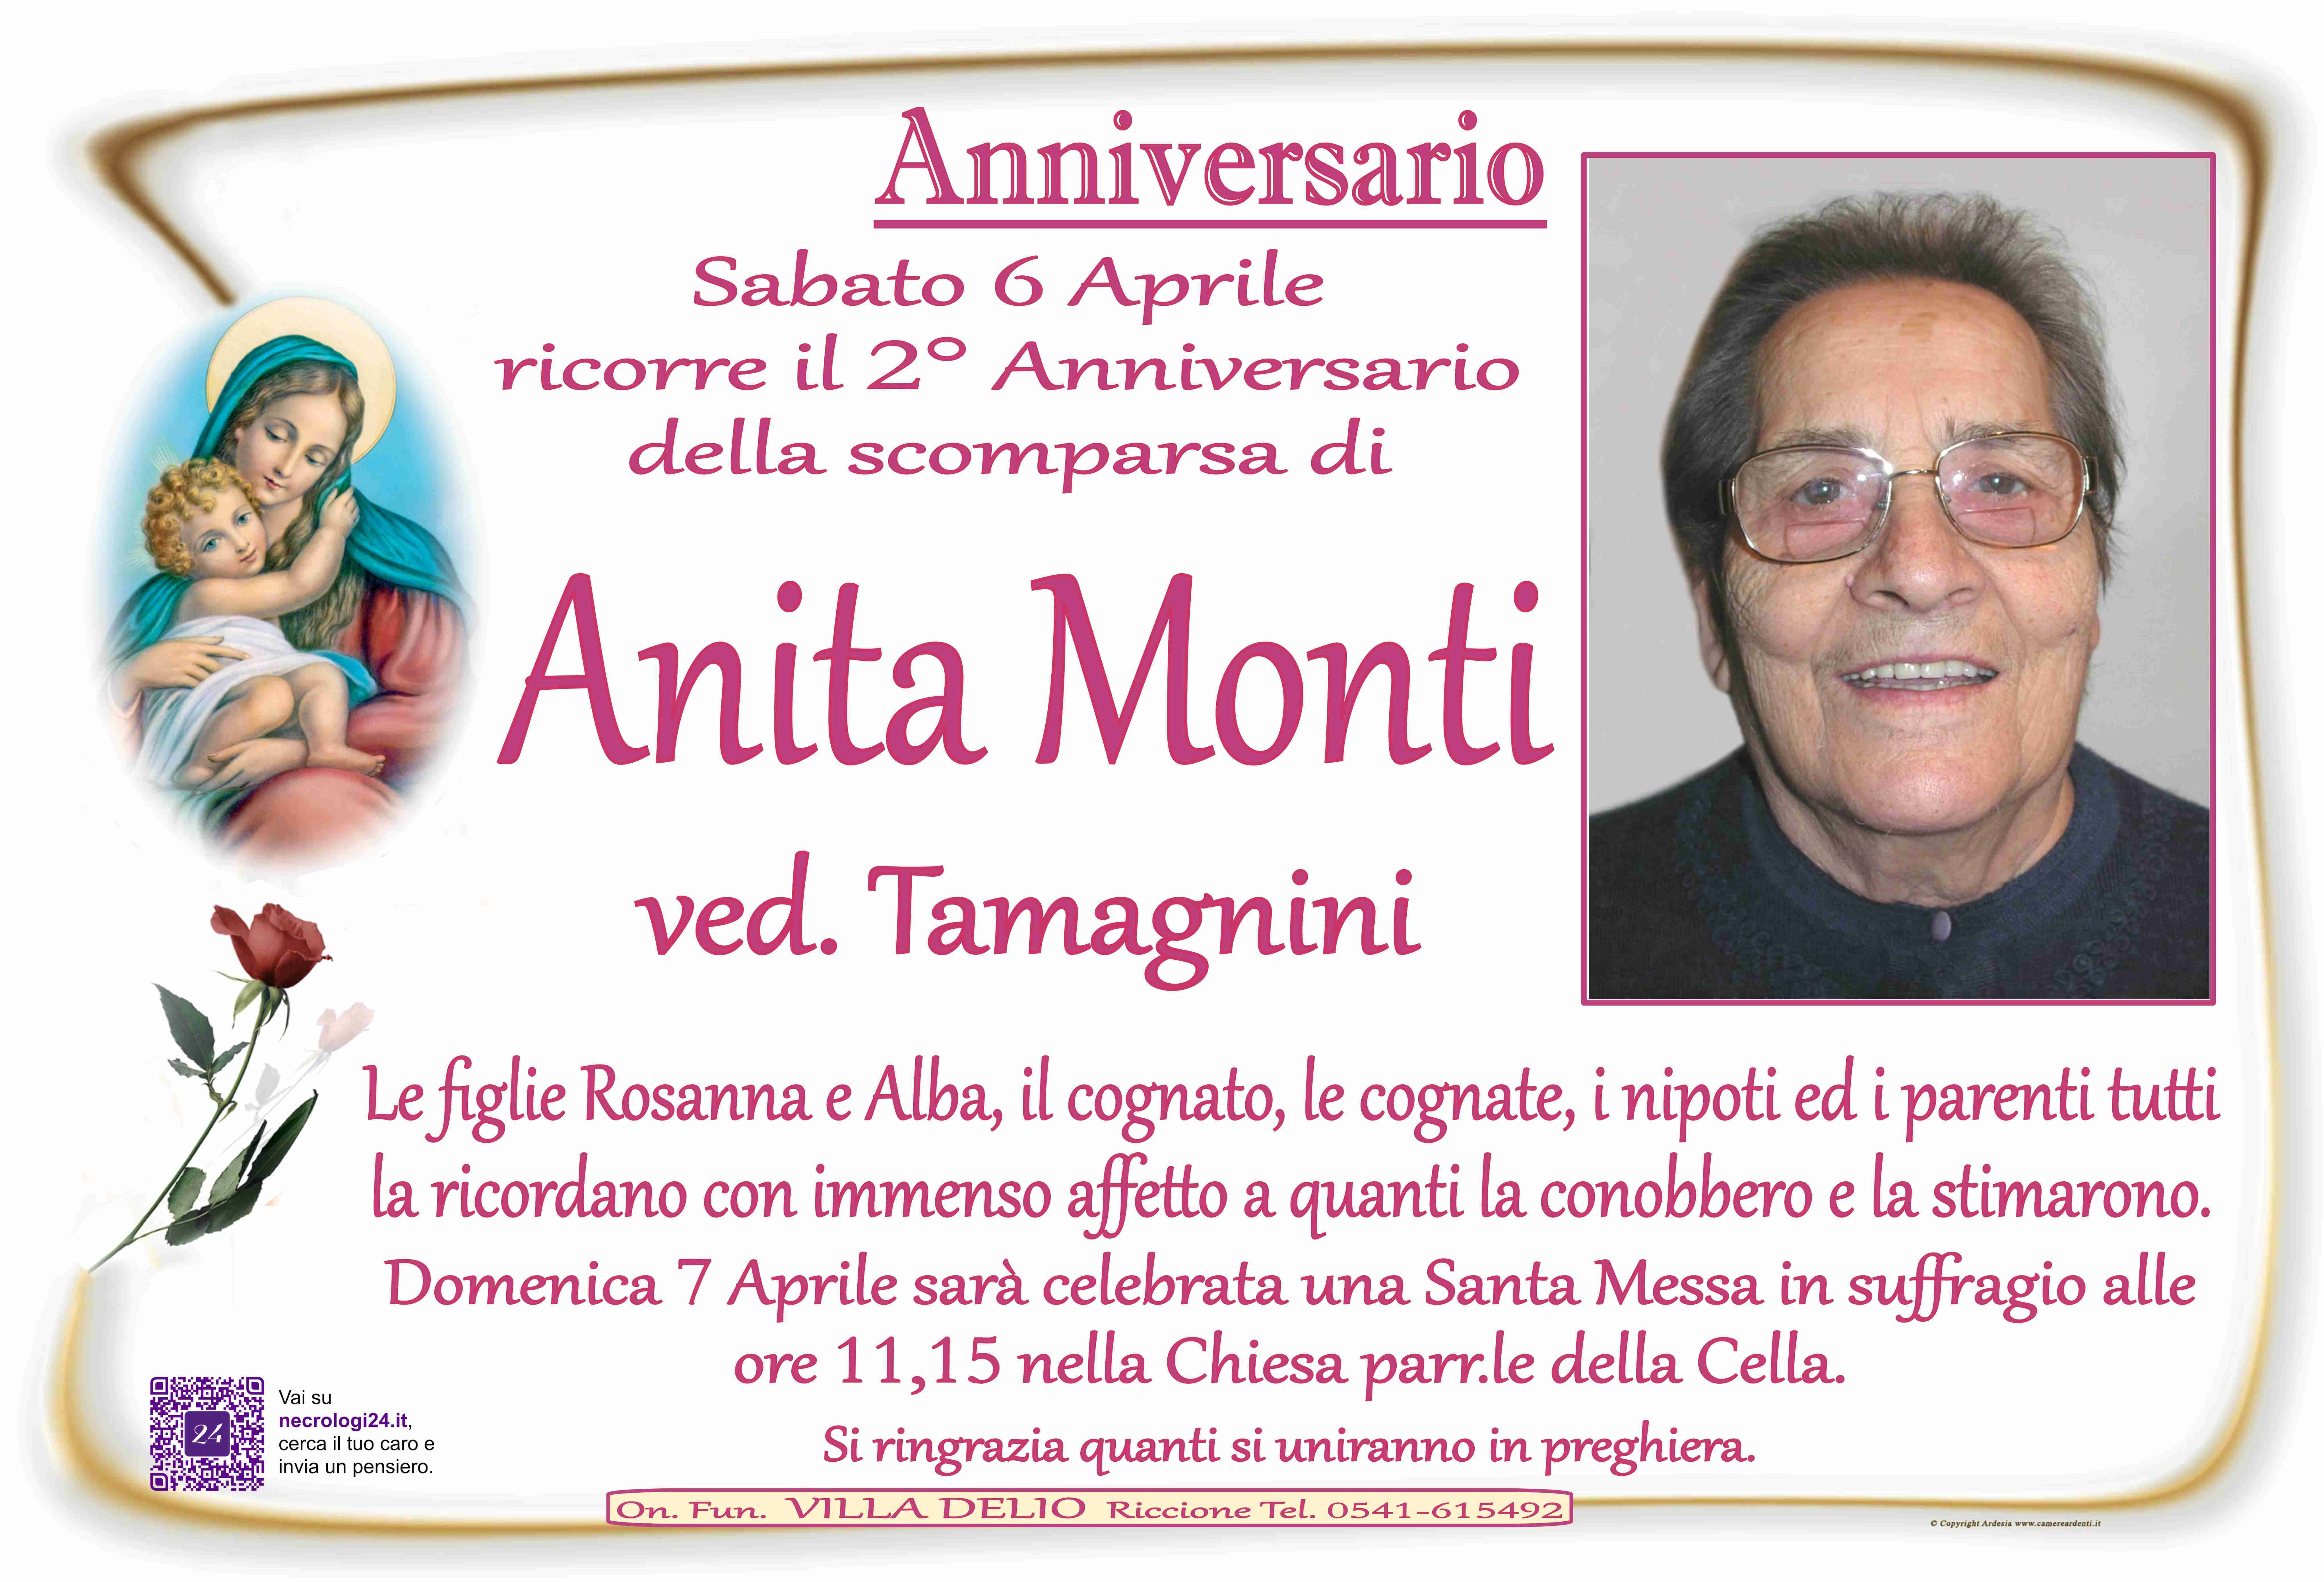 Anita Monti ved. Tamagnini